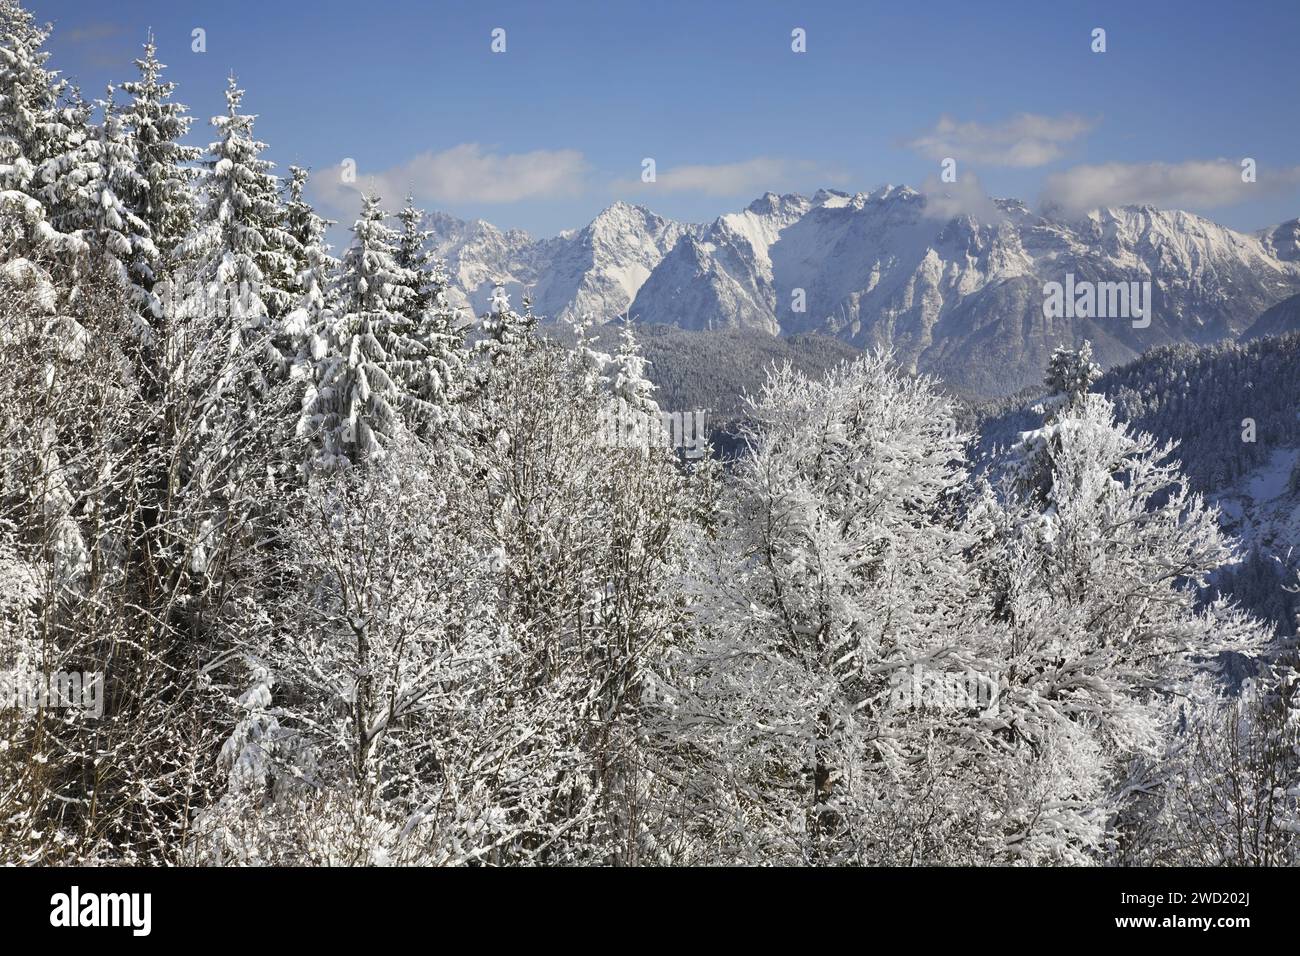 Eckbauer mountain near Garmisch-Partenkirchen. Germany Stock Photo